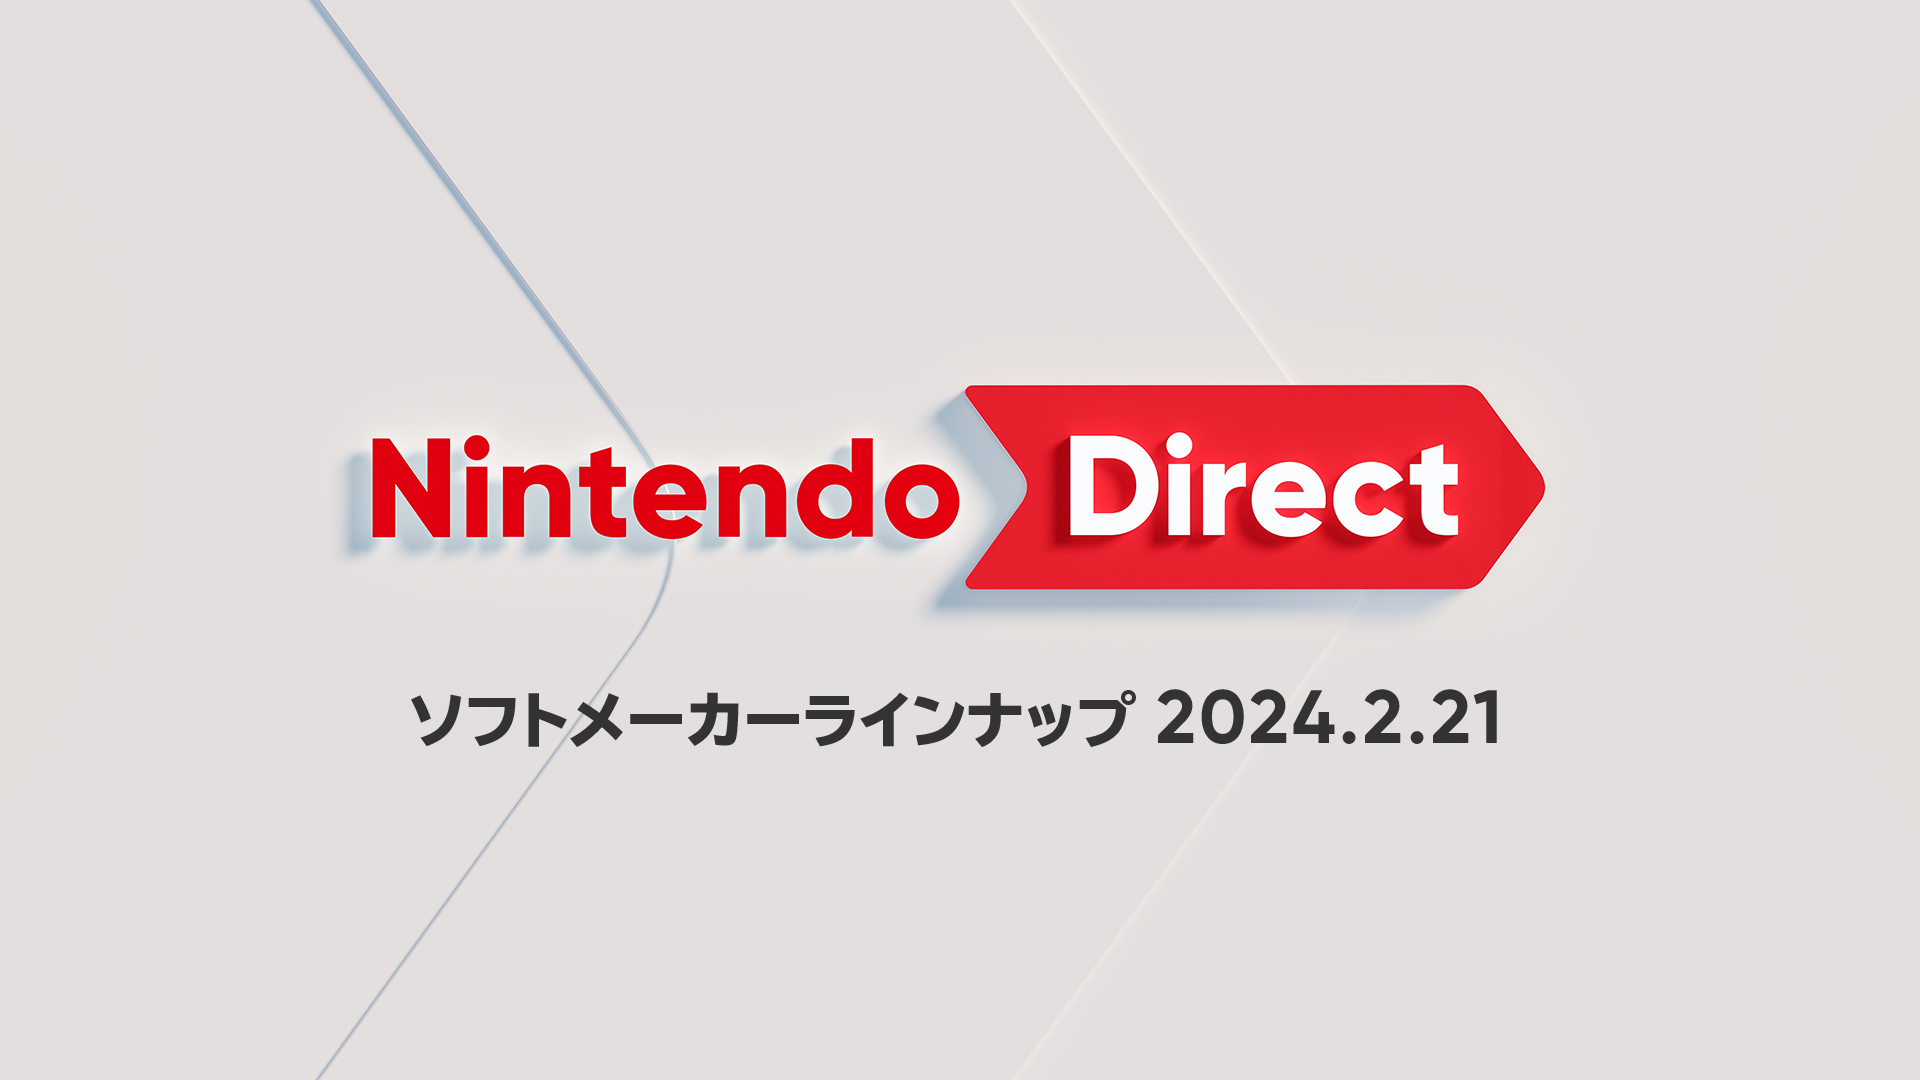 「Nintendo Direct ソフトメーカーラインナップ 2024.2.21」特集